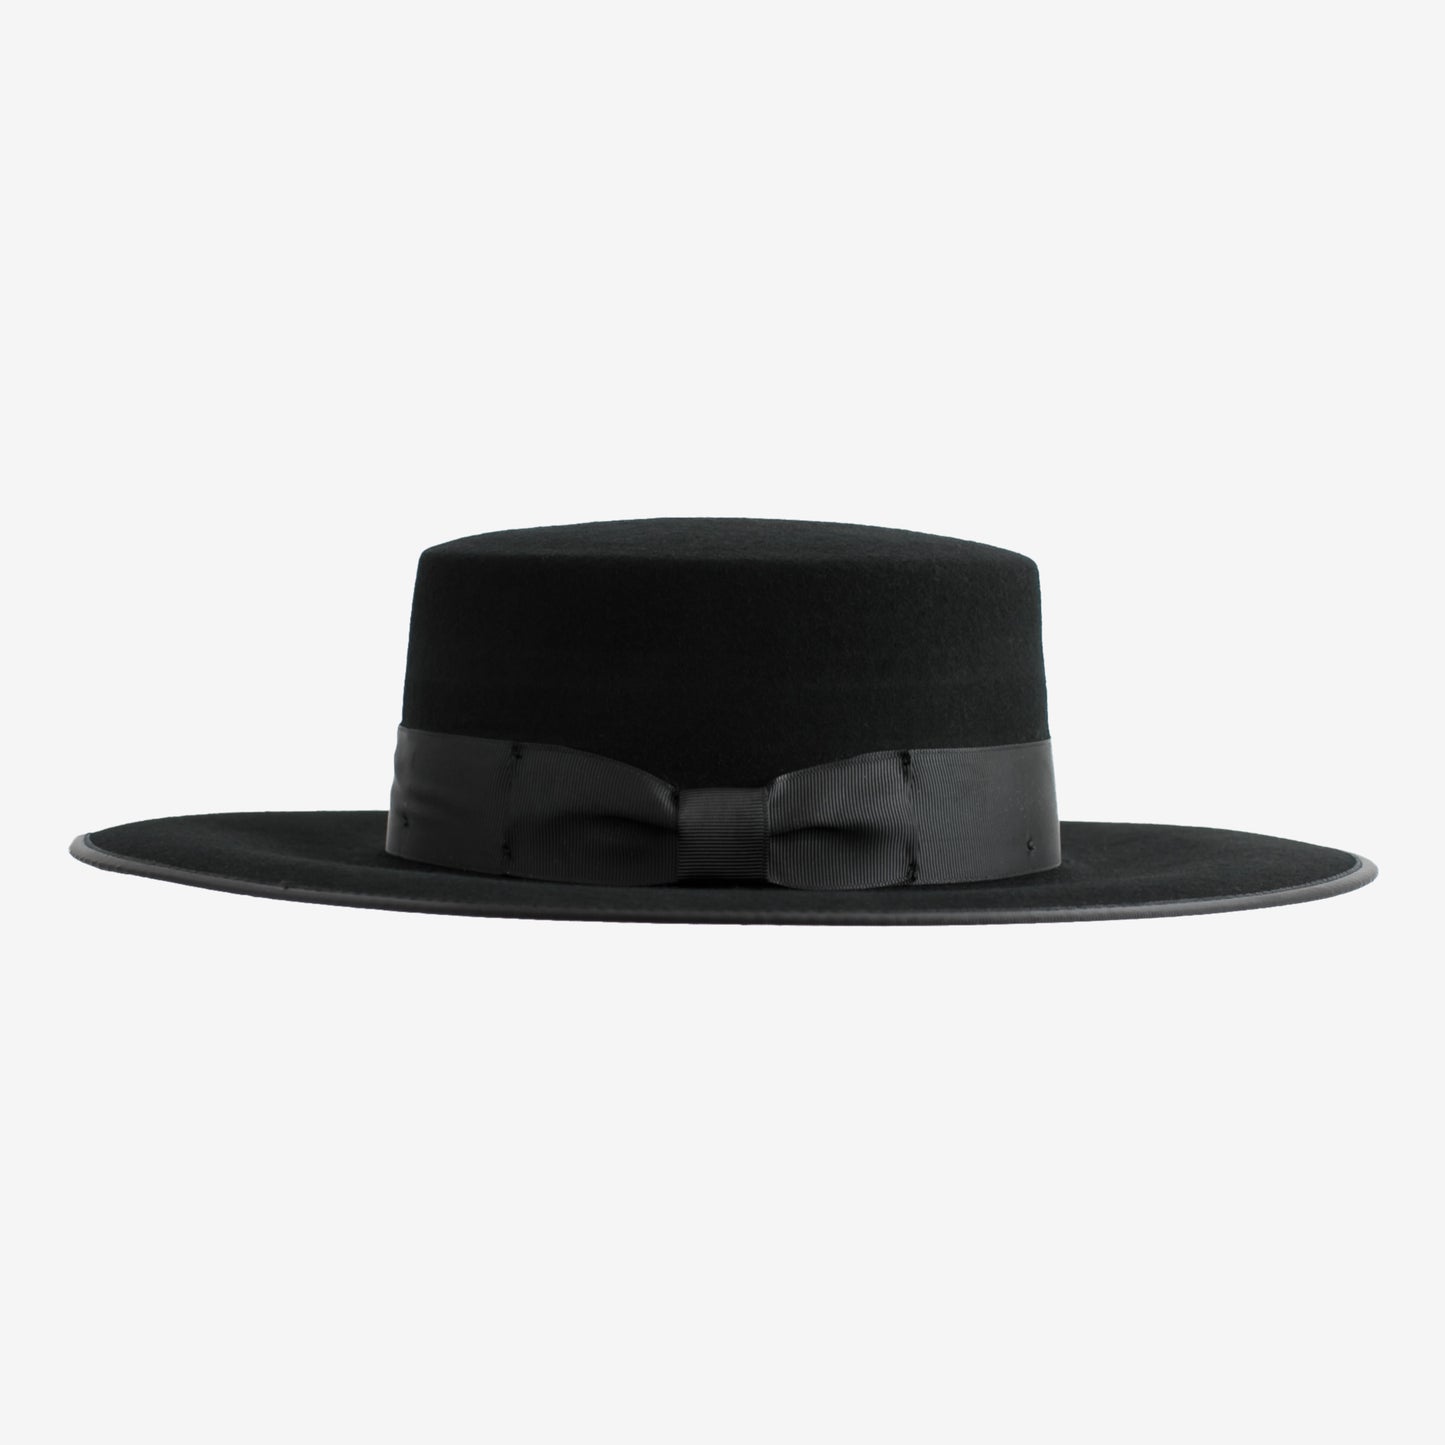 mindo-hats-claudia-cordobes-wool-hat-black-side